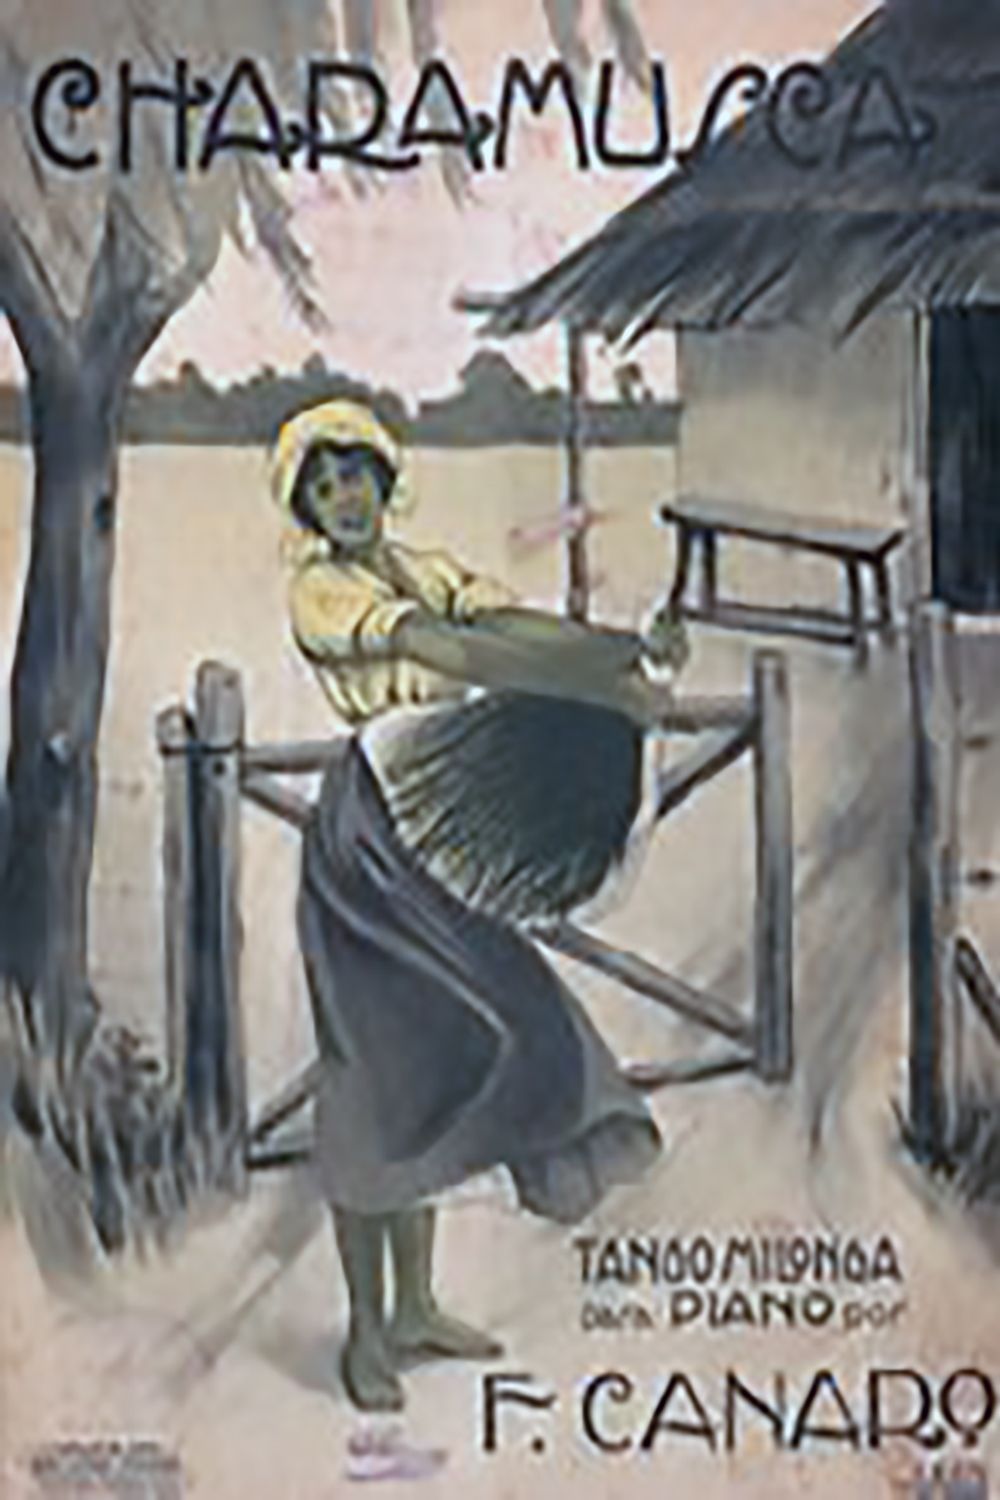 "Charamusca", Argentine Tango music sheet cover.